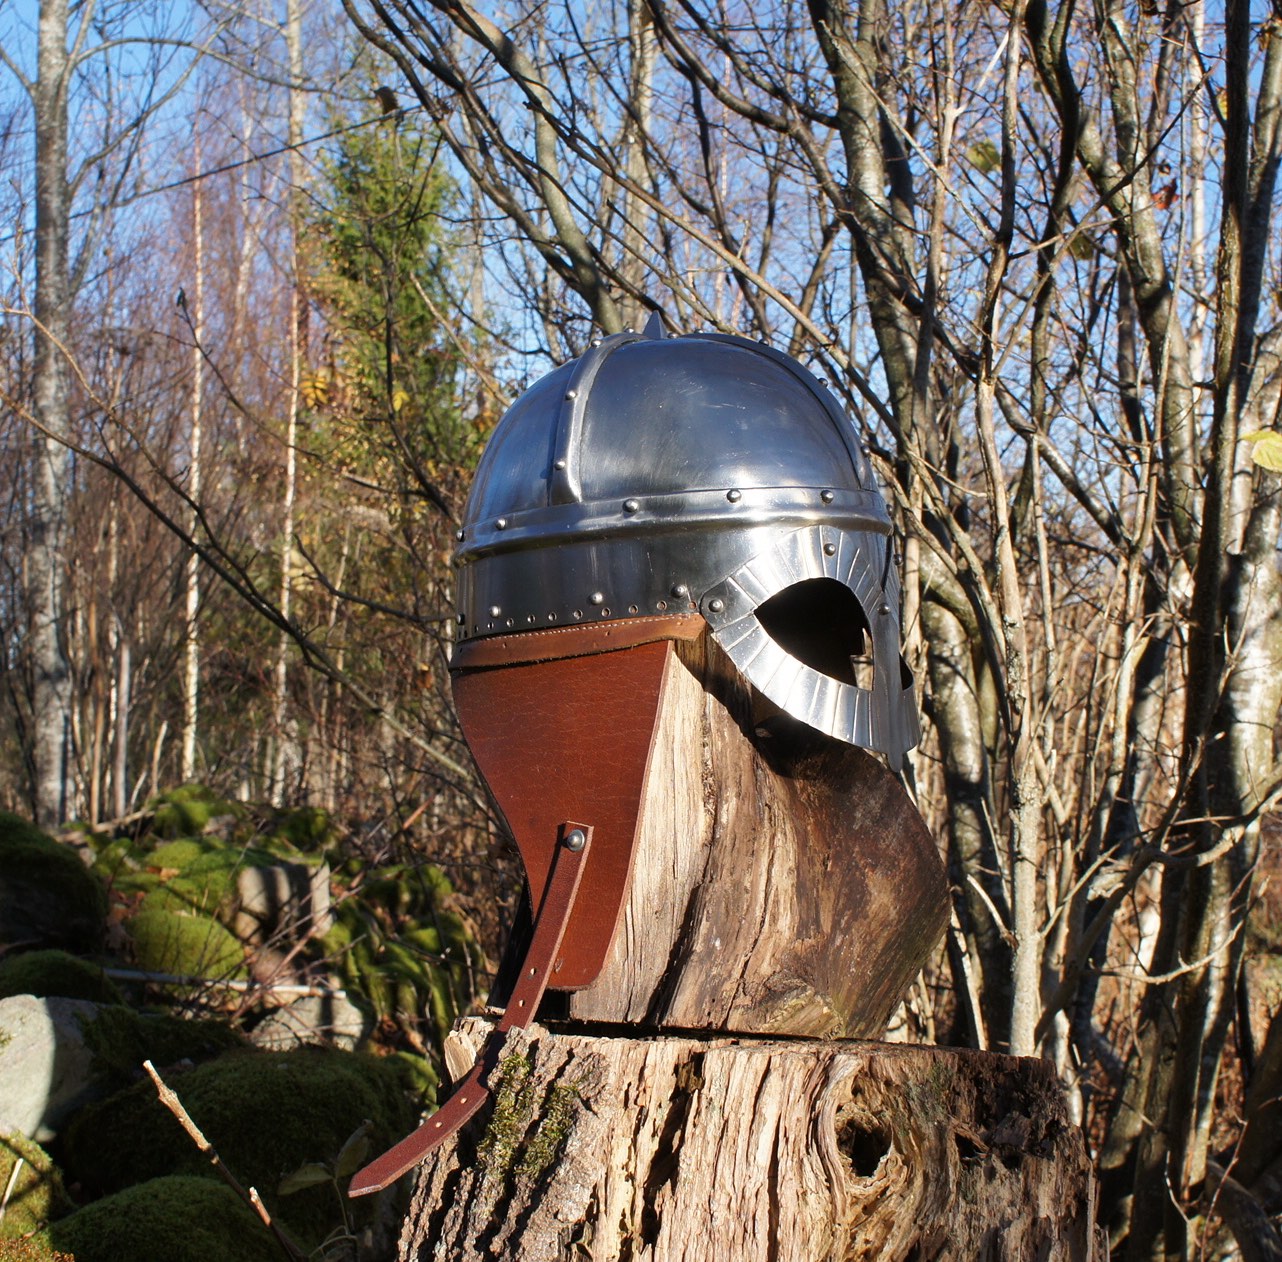 Viking helmet Gjermundbu